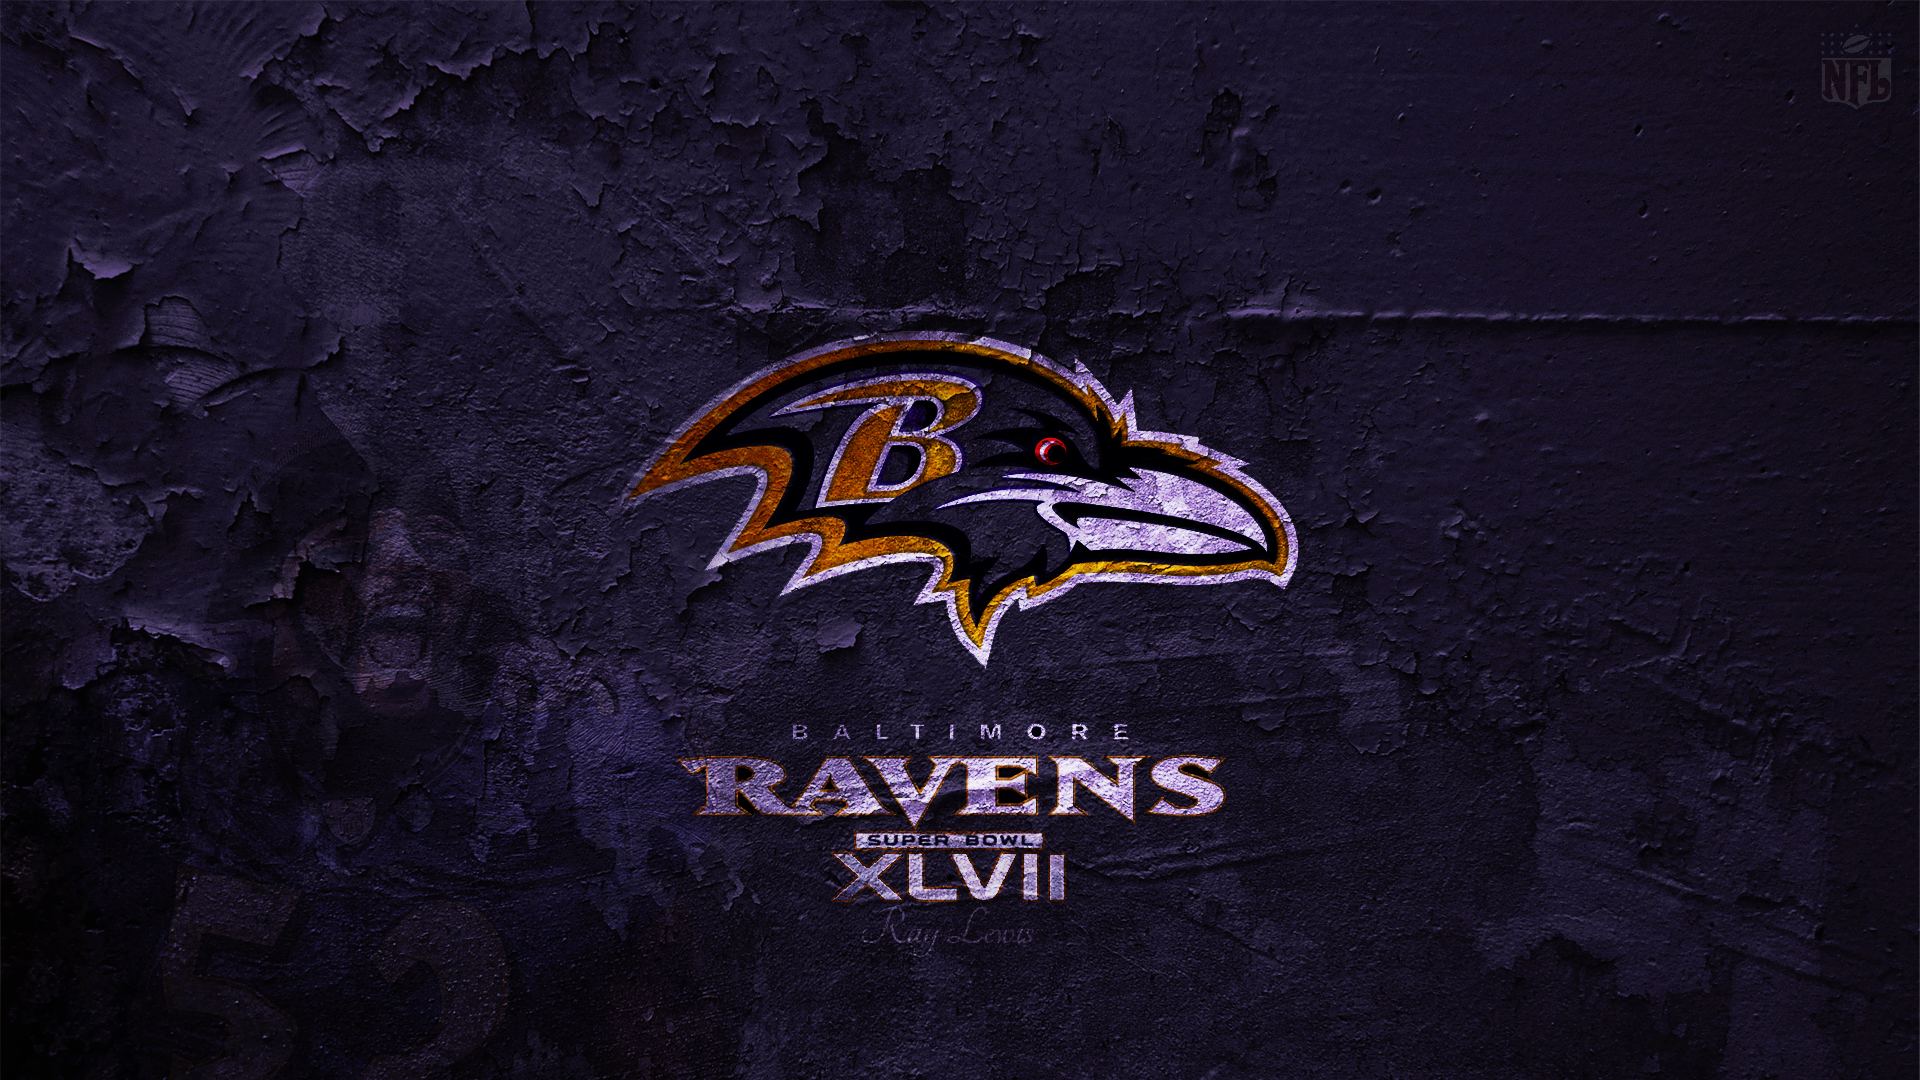 Baltimore Ravens wallpaper hd free download